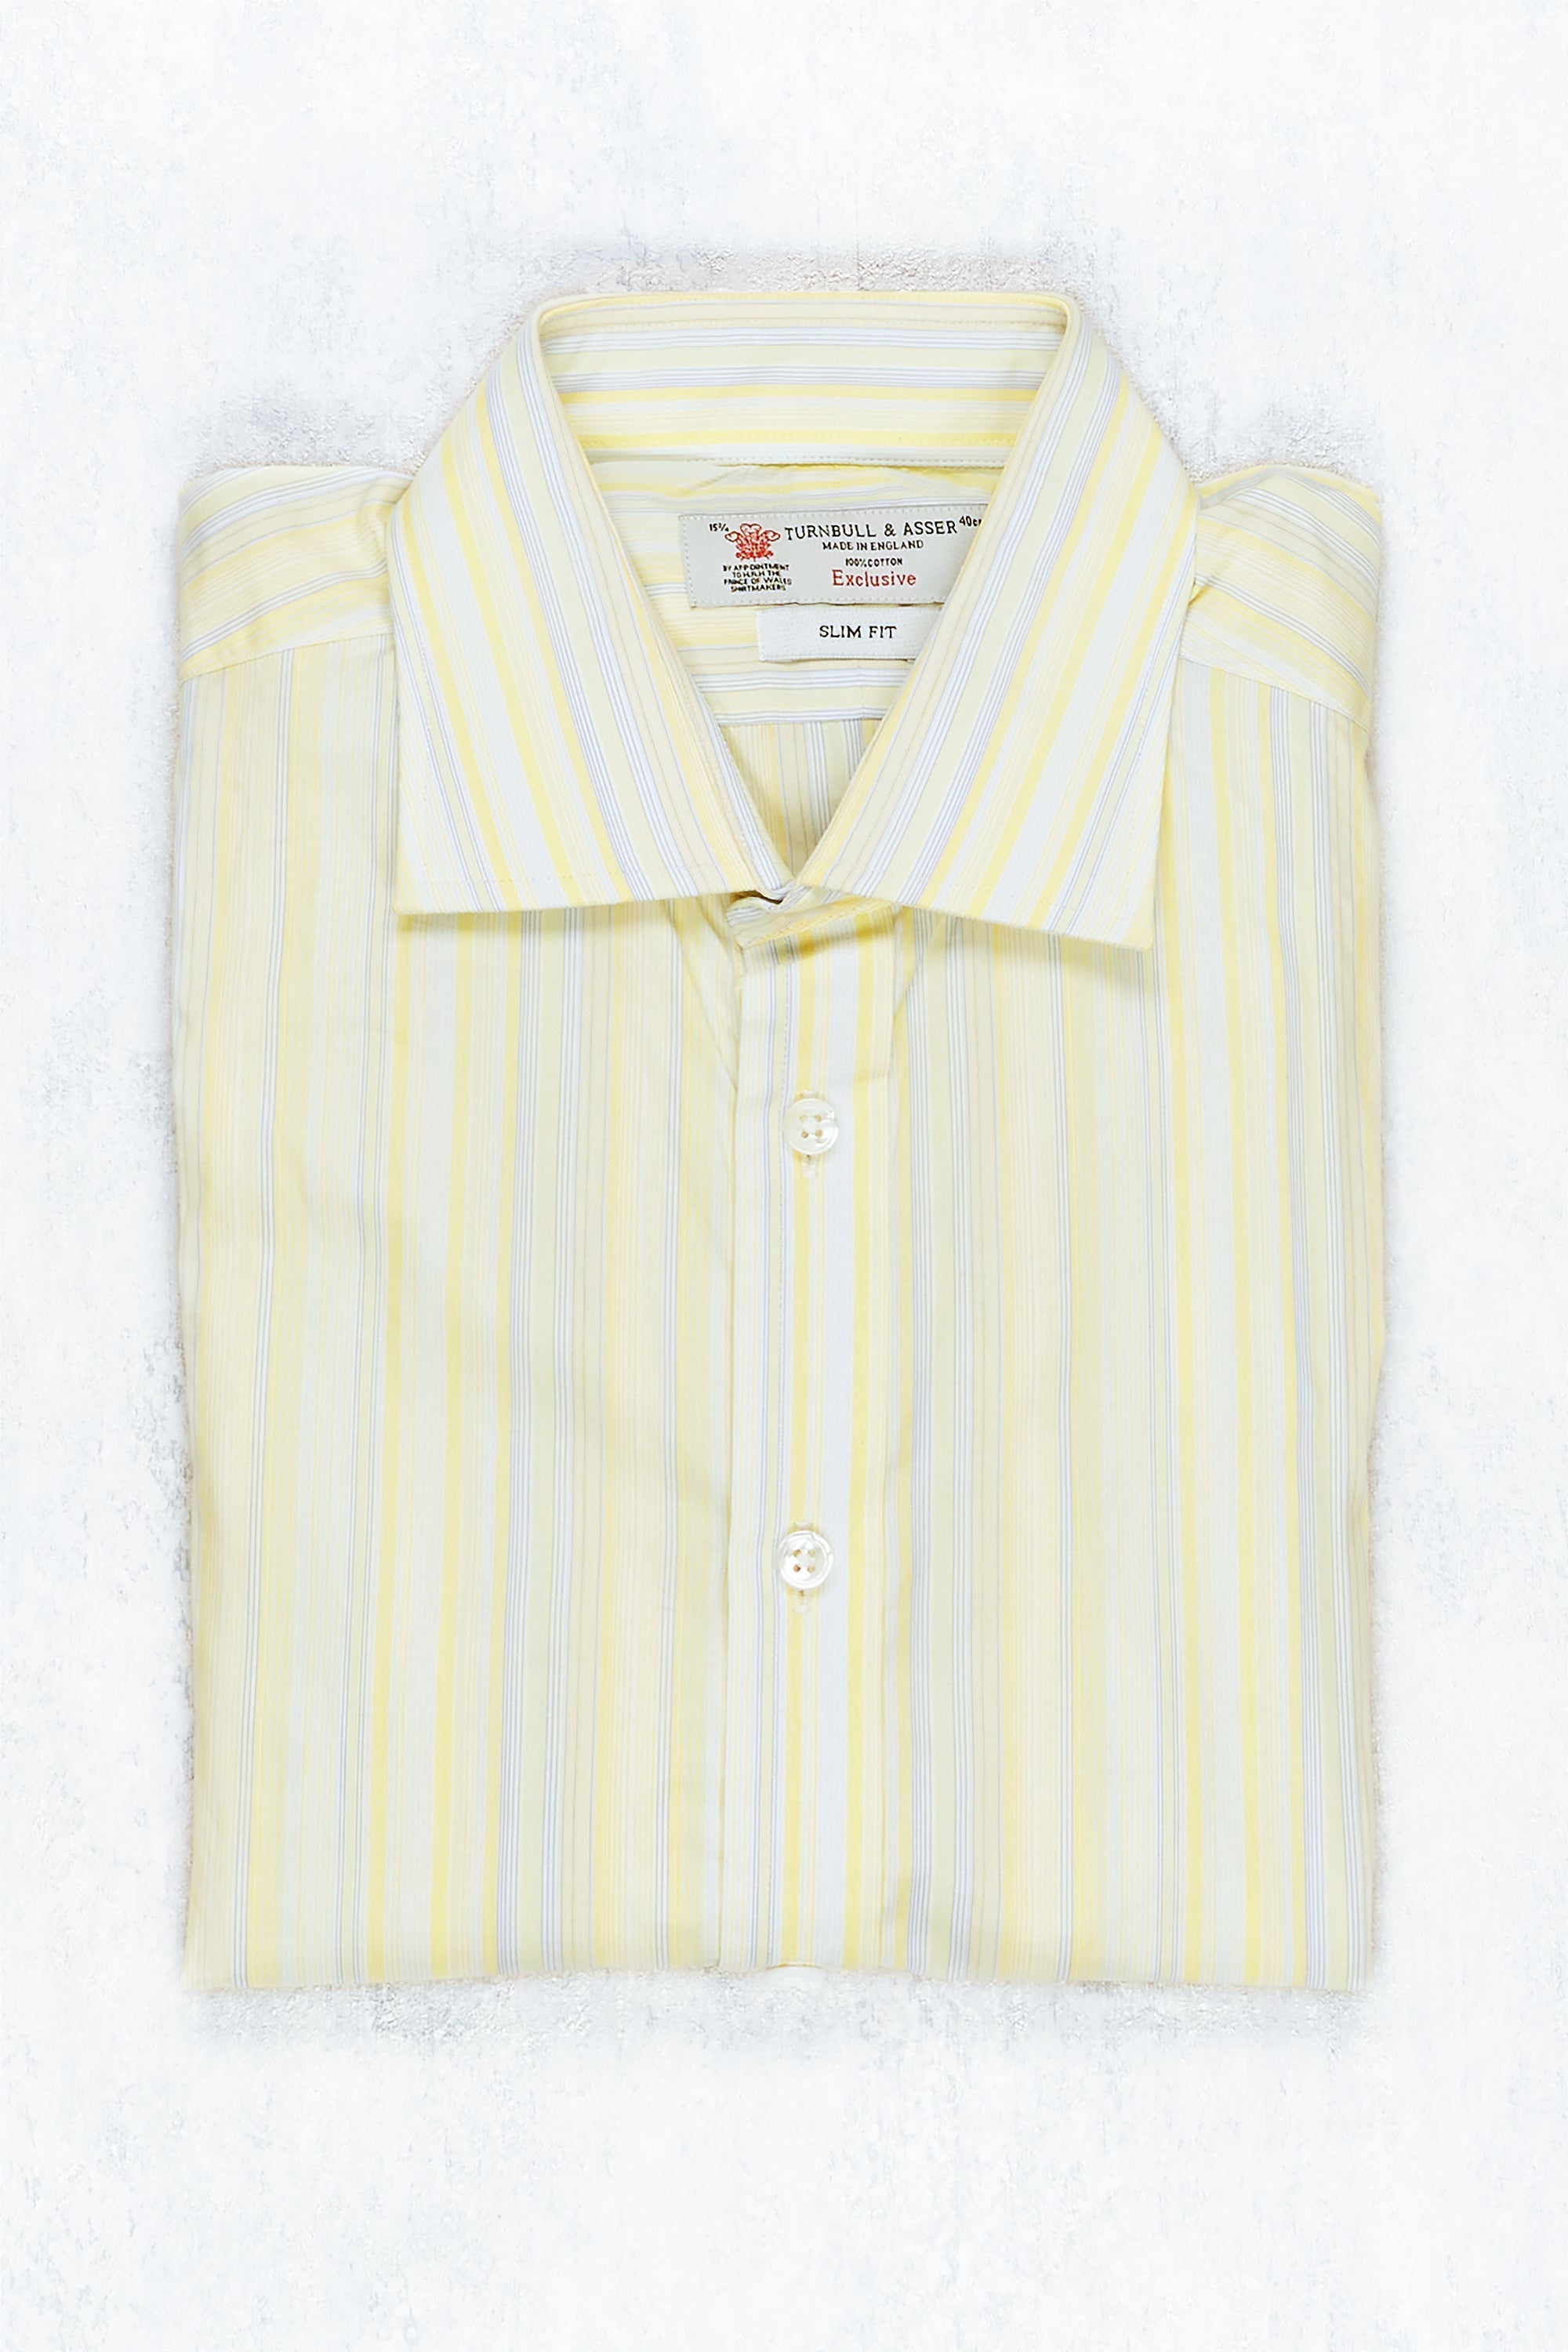 Turnbull & Asser Yellow/Blue/White Stripe Poplin Cotton Spread Collar Shirt